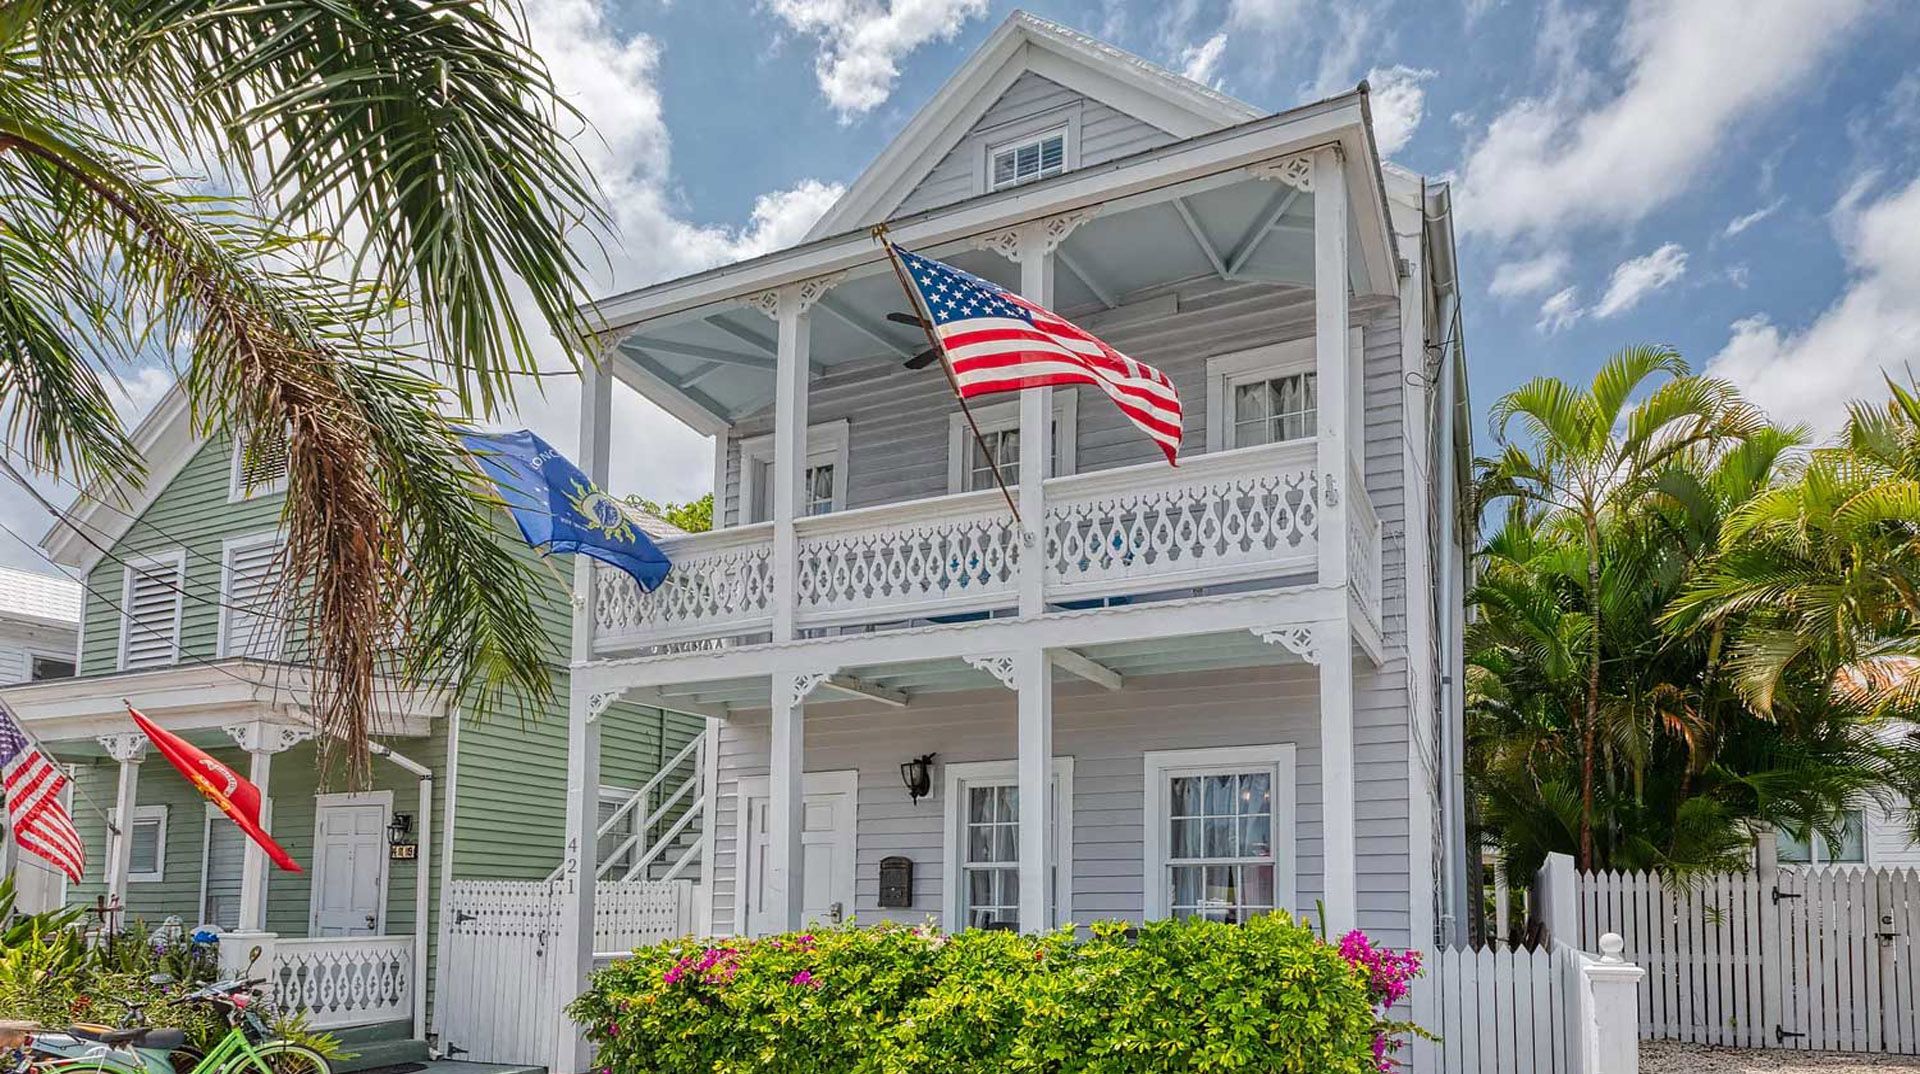 Florida Keys Home Purchase Mortgage, Home Purchase Mortgage for Florida Keys, The Florida Keys Home Purchase Mortgage